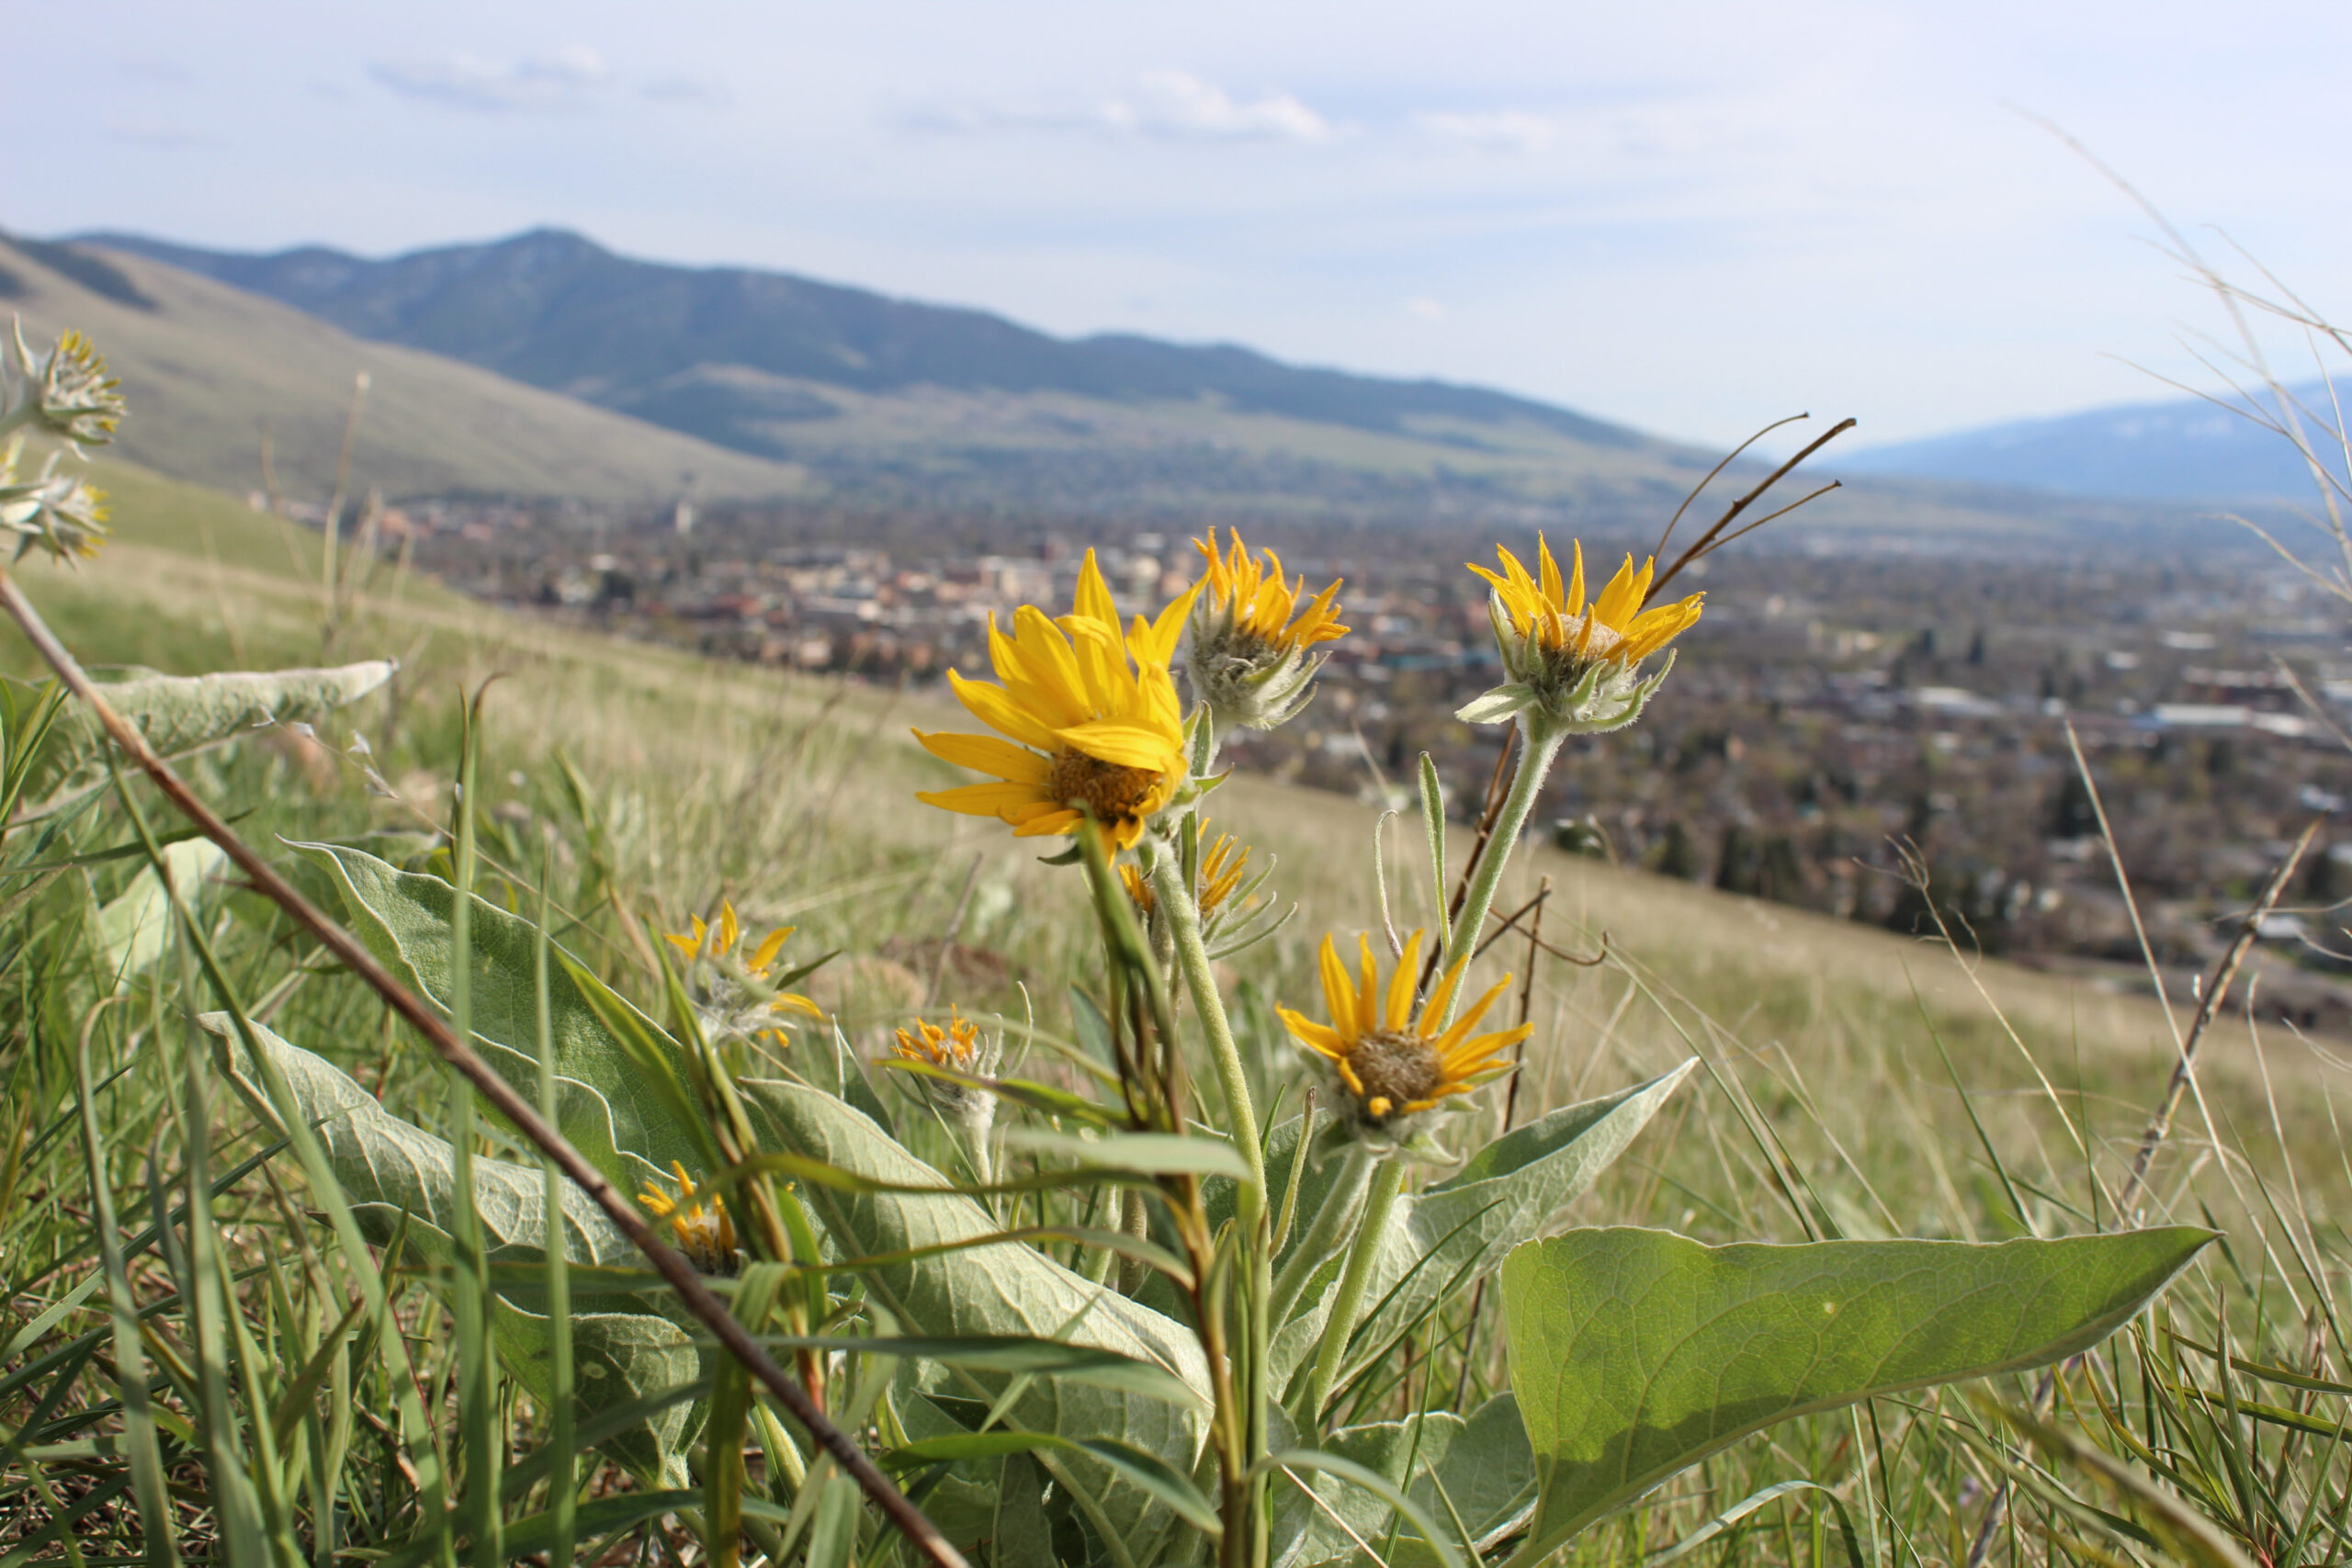 Flowers growing on hillside overlooking town